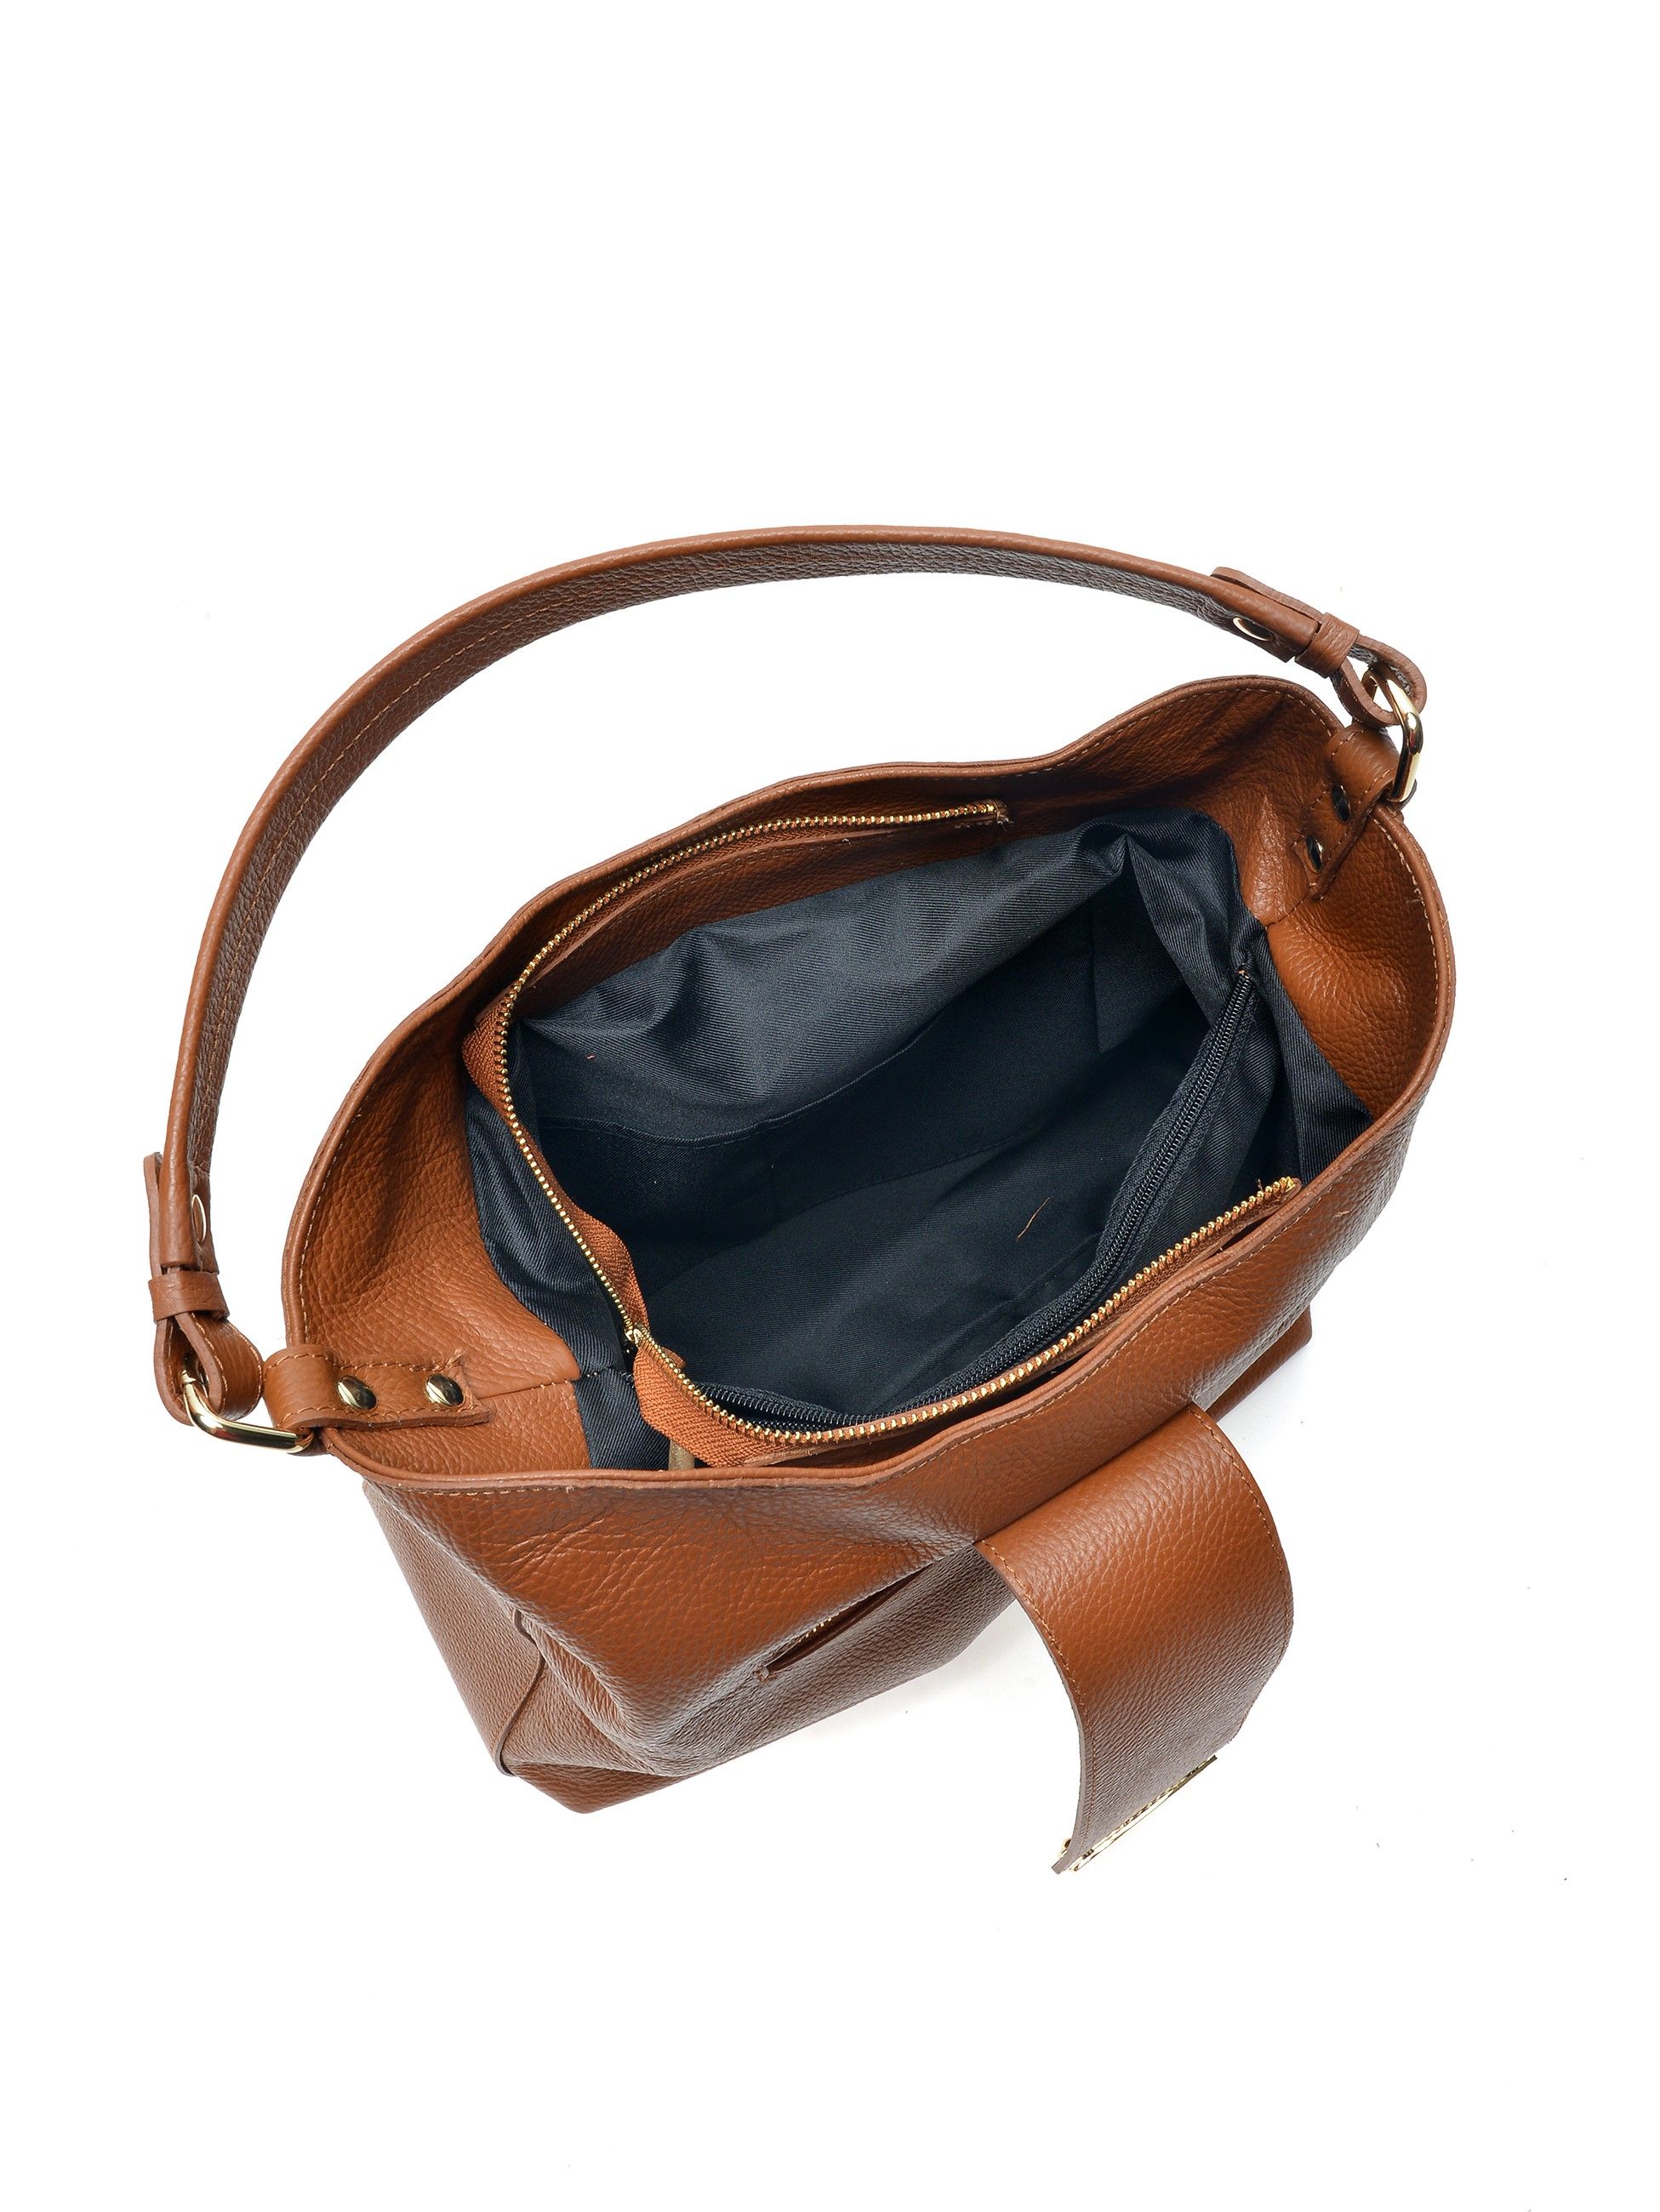 Top Handle Bag

100% cow leather

Top zip closure

Double compartment bag

Inner zipped compartment

Interior zip pocket

Back zip pocket

Dimensions (L): 31x36x16 cm

Handle: 50 cm FIX

Shoulder strap: 1x120 cm - adjustable